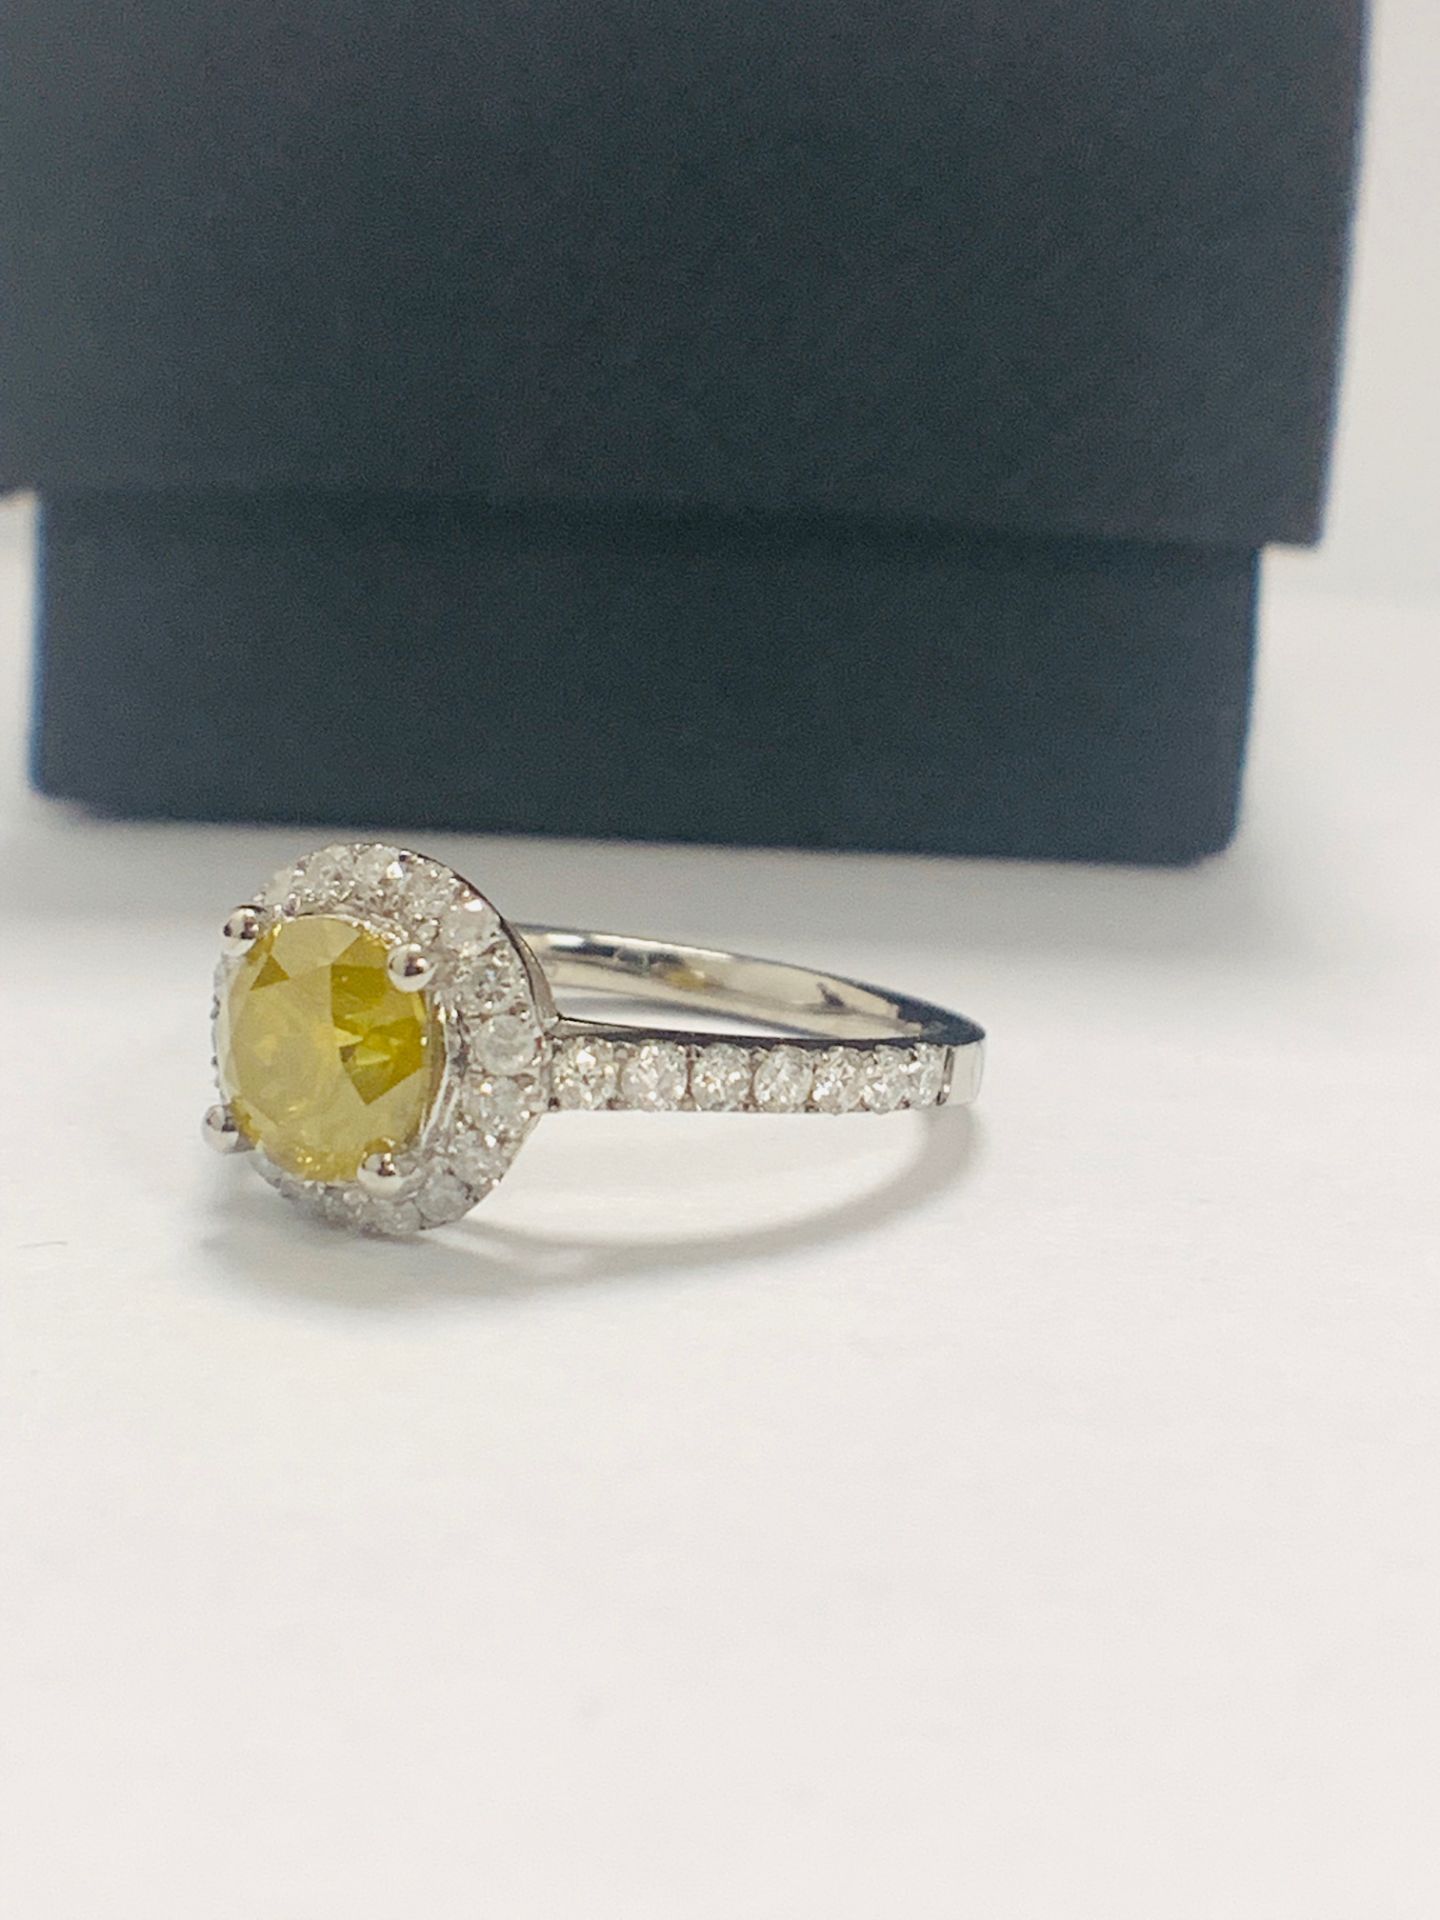 14ct White Gold Diamond ring featuring centre, round brilliant cut, yellow Diamond (1.08ct) - Image 2 of 12